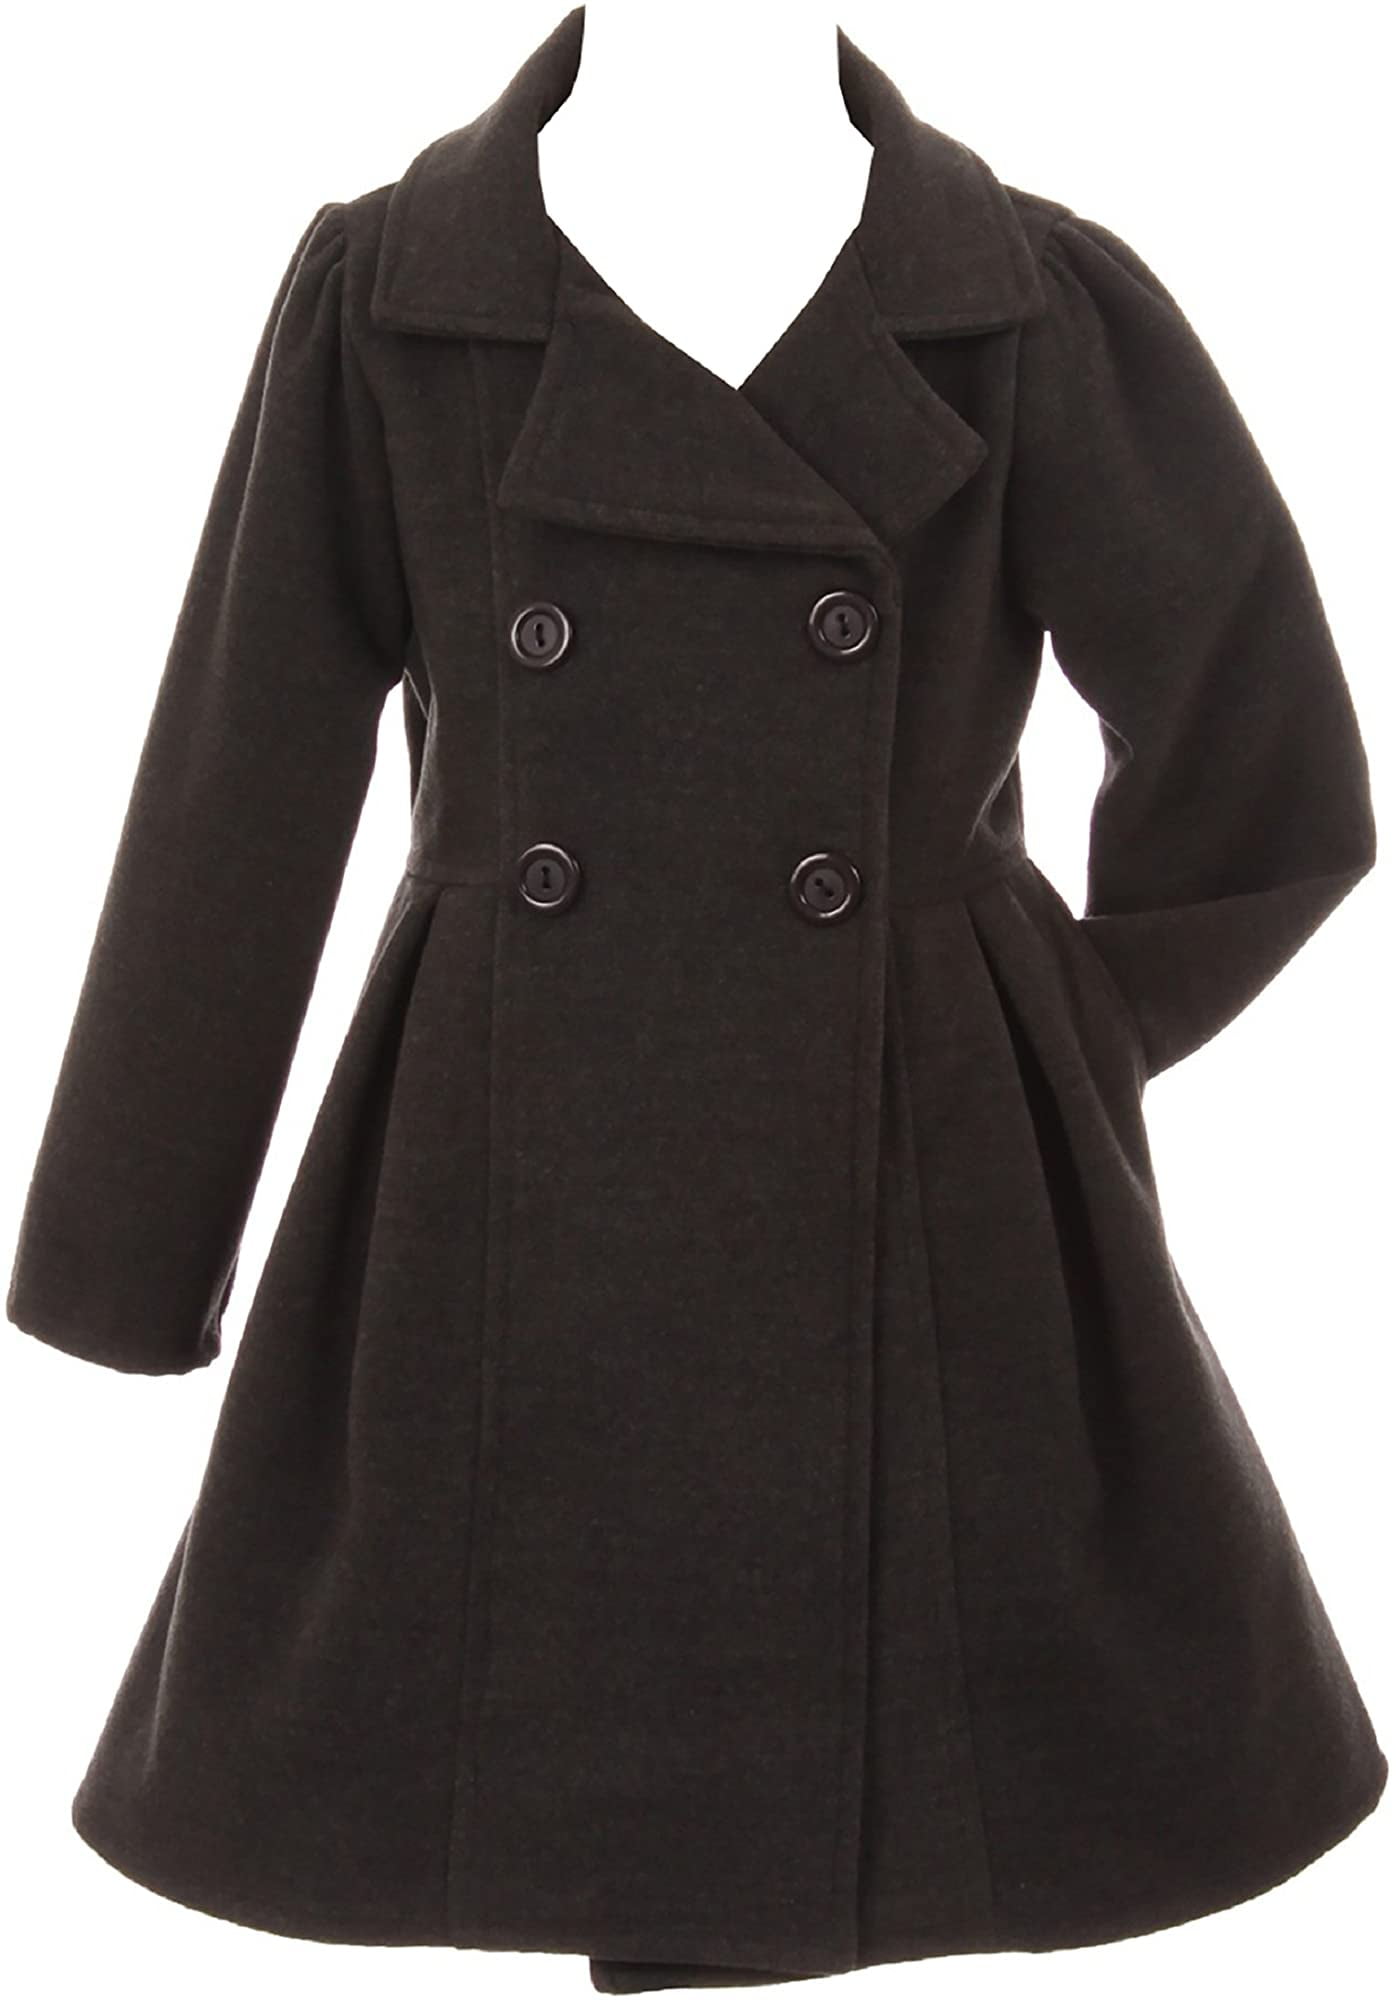 BluNight Collection Girls Dress Coat Long Sleeve Button Pocket Long Winter Coat Outerwear 2-14